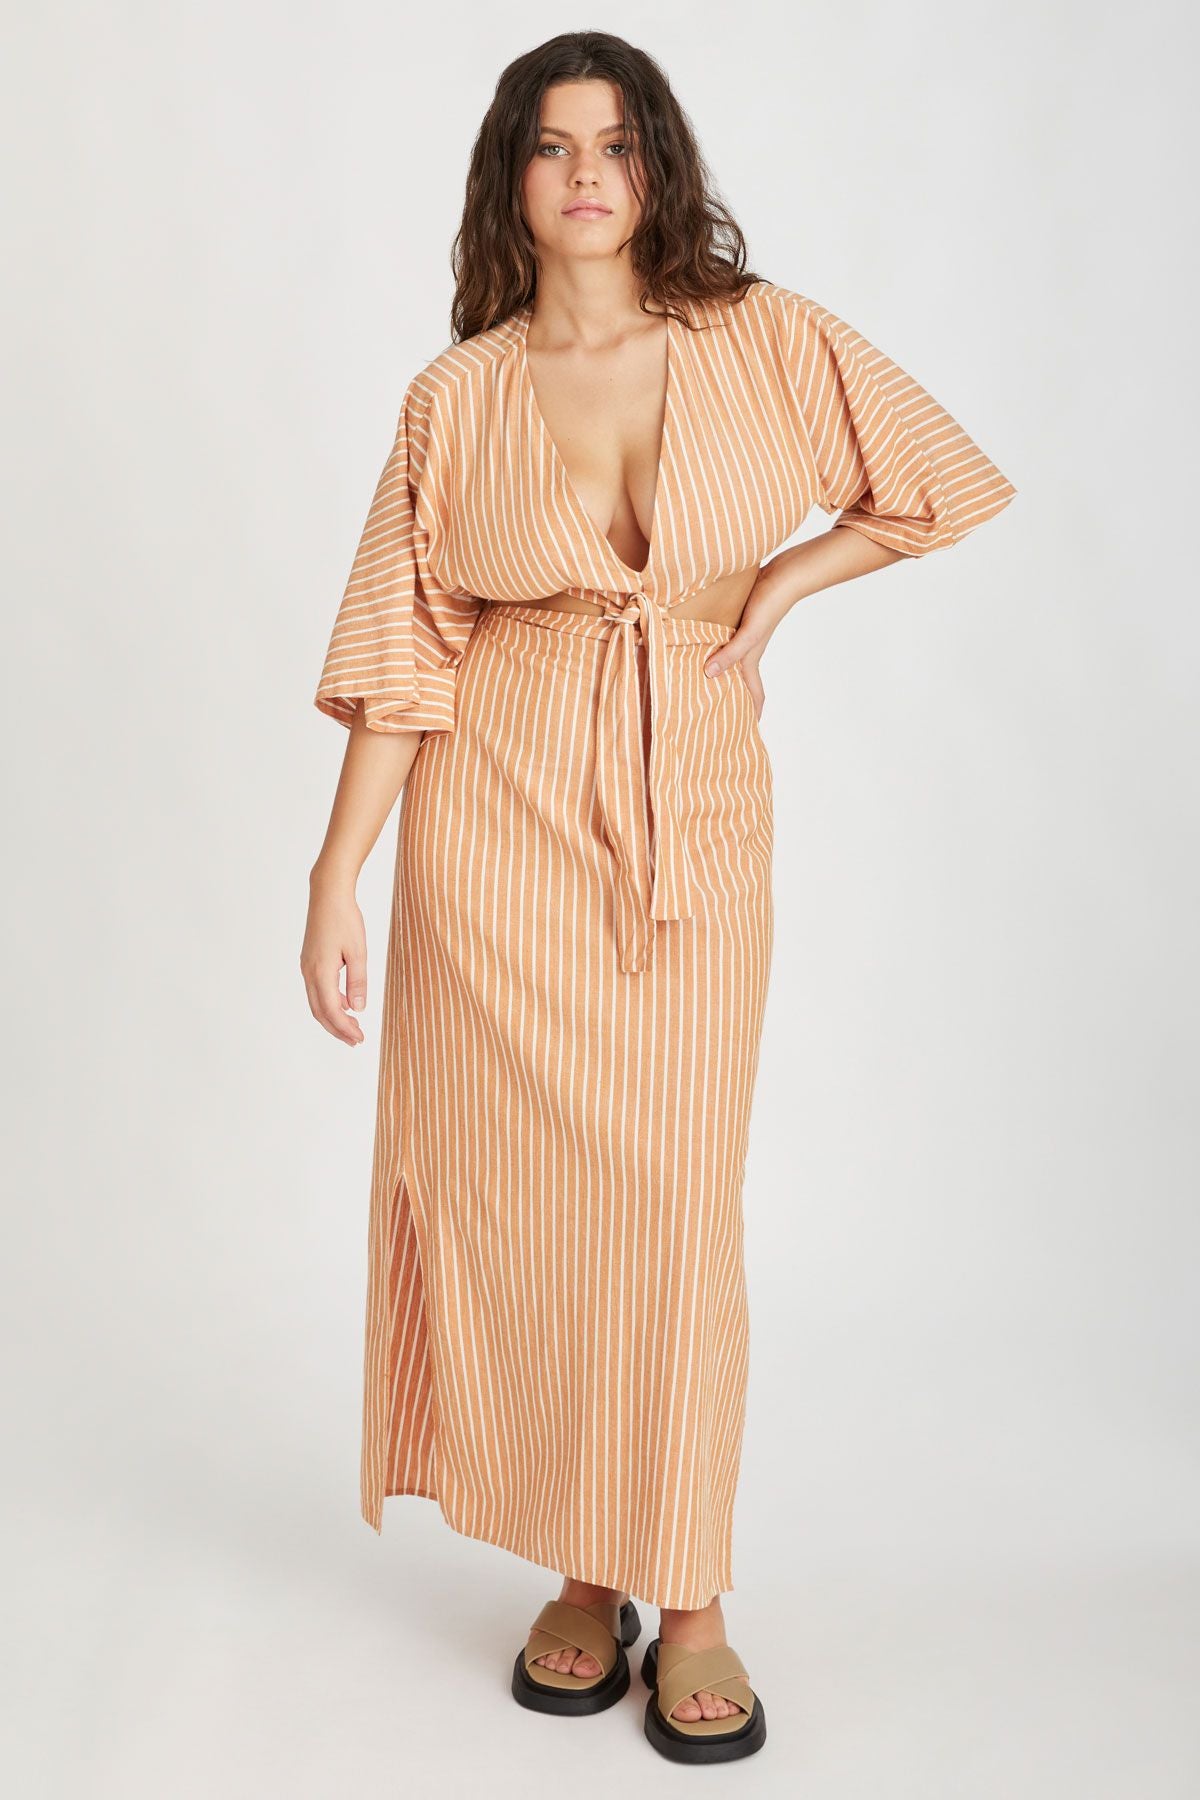 Tangerine Stripe Dress